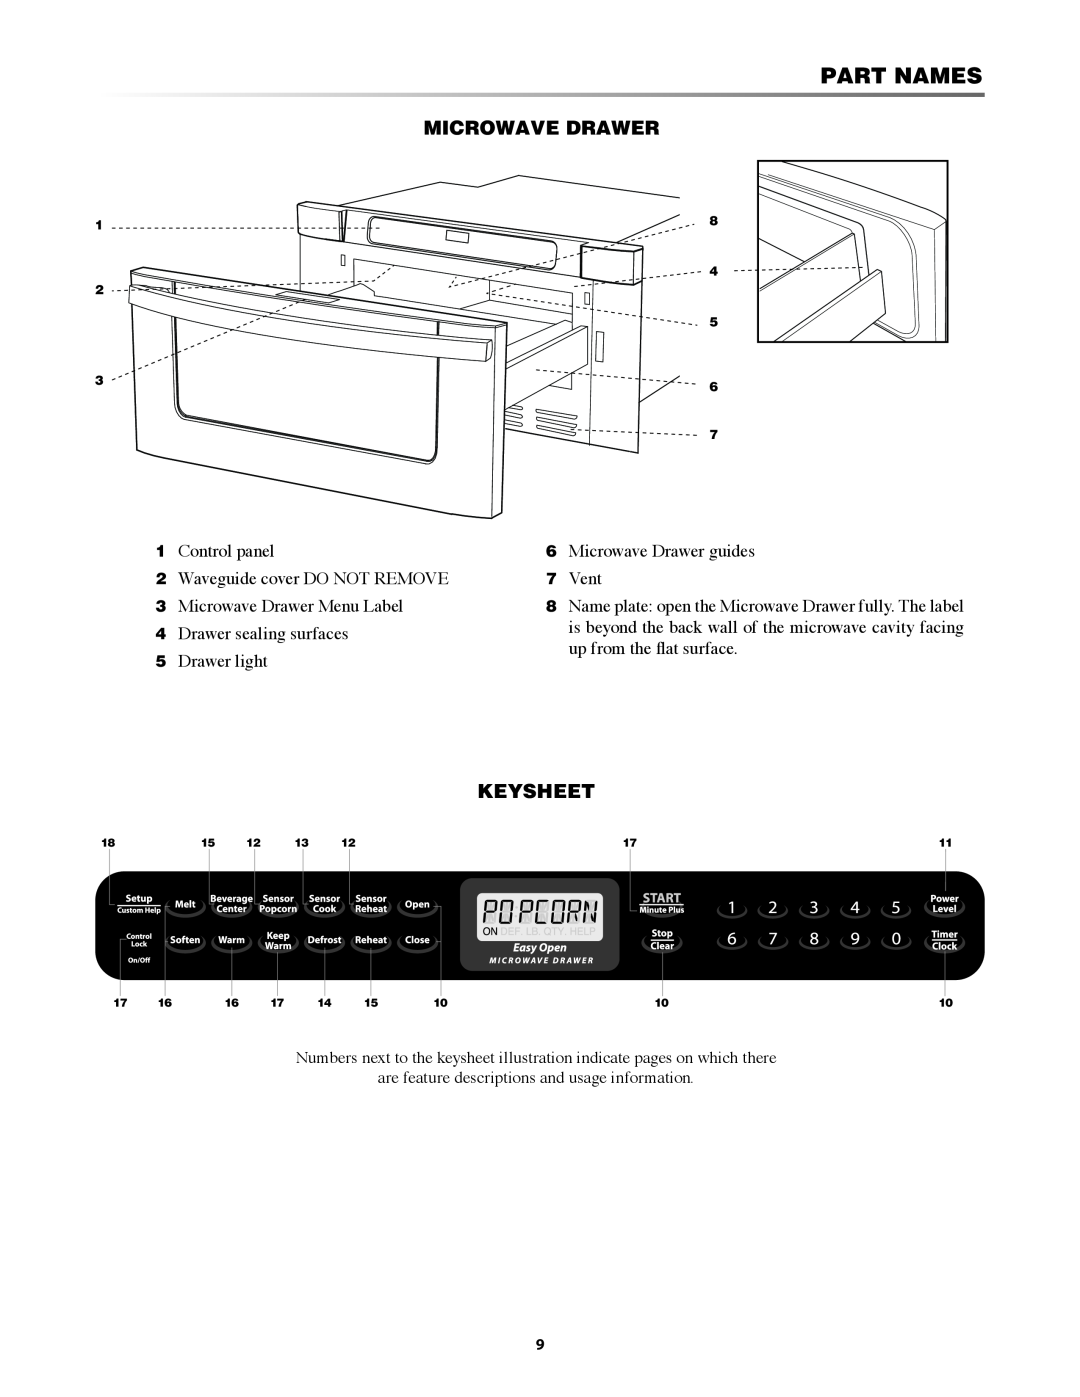 Sharp KB6525PKRB operation manual Part Names, Microwave Drawer, Keysheet 